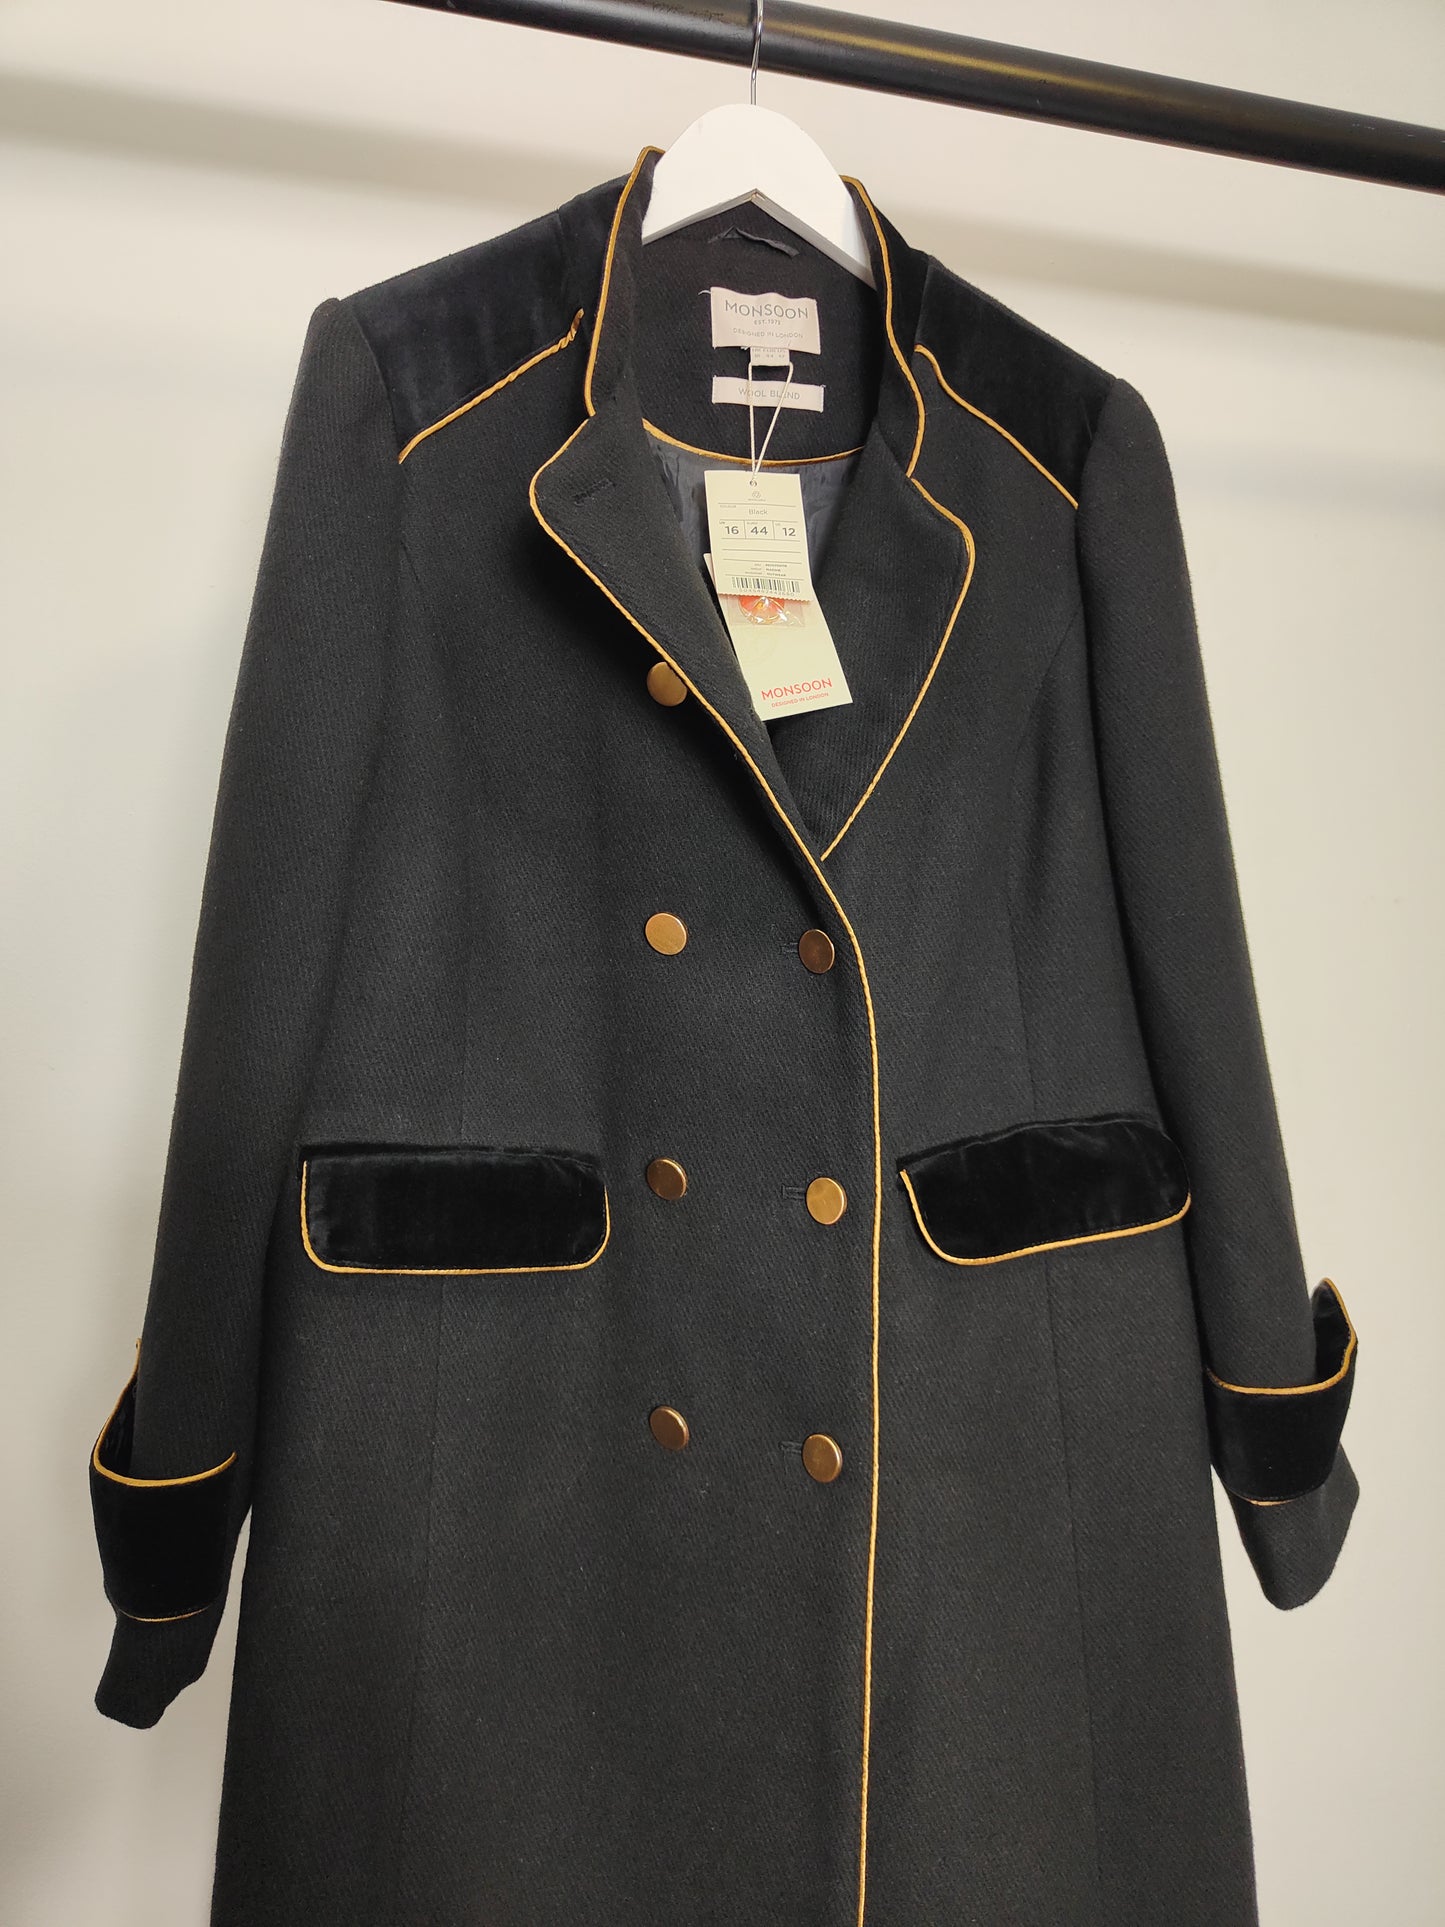 Women's Military Jacket Wool Blend Double Breasted Coat in Black UK 16 / EU 44